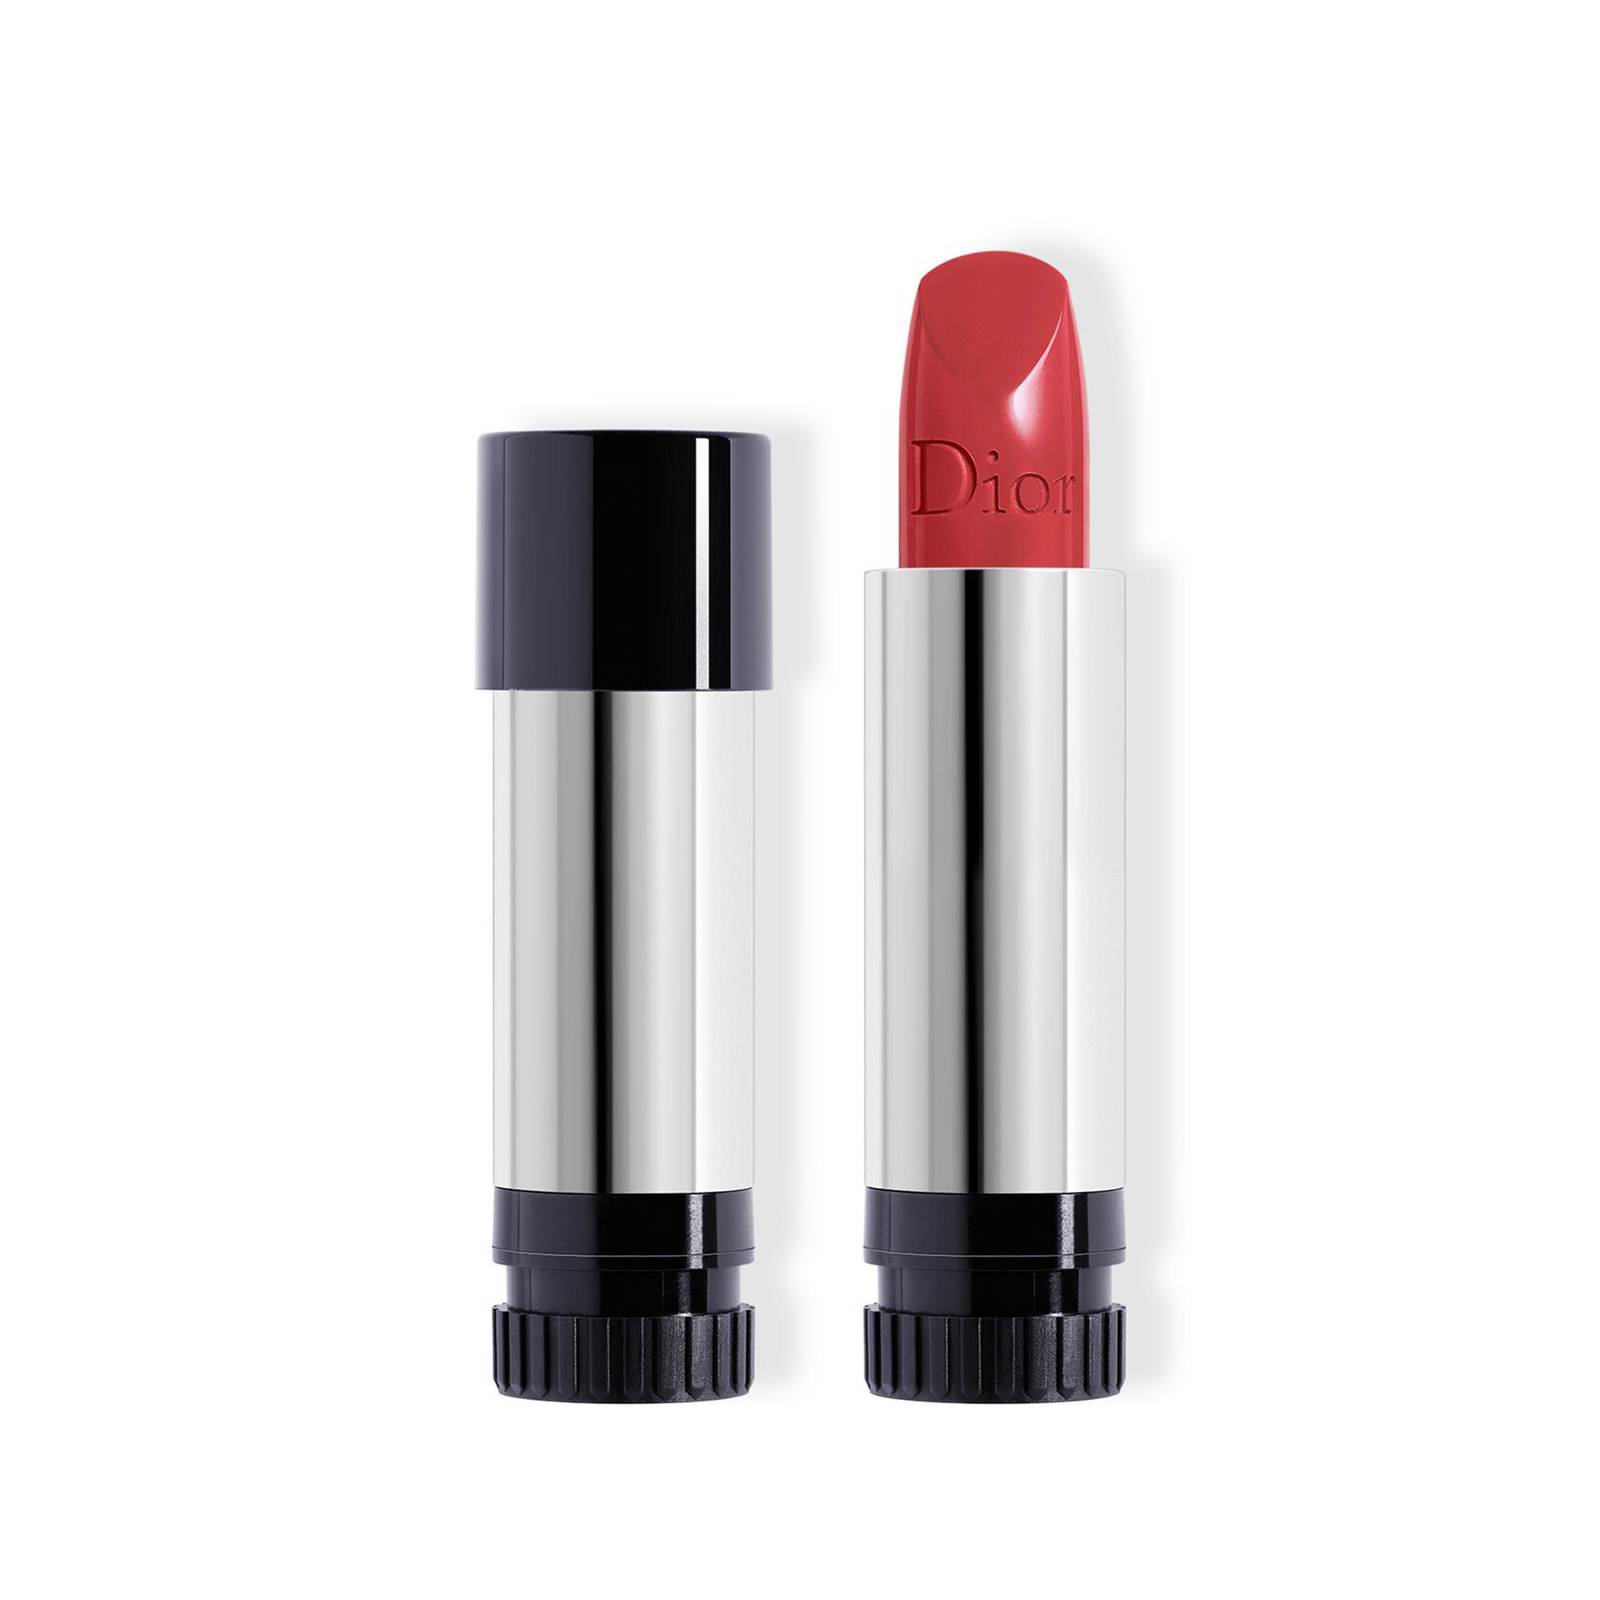 Dior Rouge Dior Couture Colour Lipstick Refill 3.5G 525 Cherie Metallic Finish